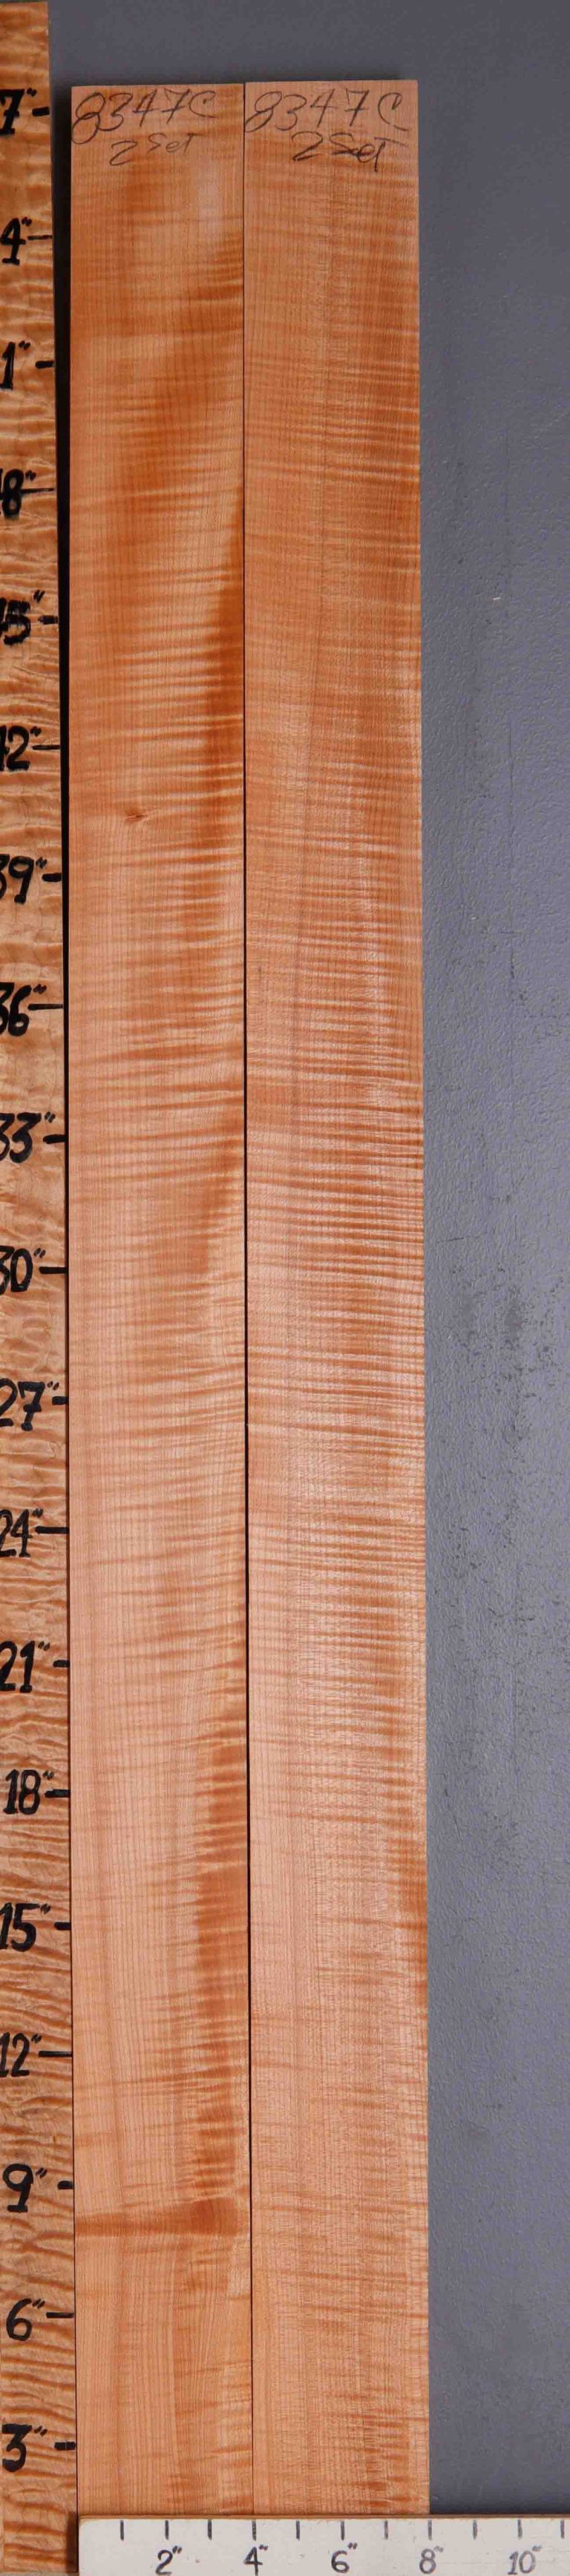 5A Curly Maple 2 Board Set Lumber 8" X 57" X 5/4 (NWT-8347C)